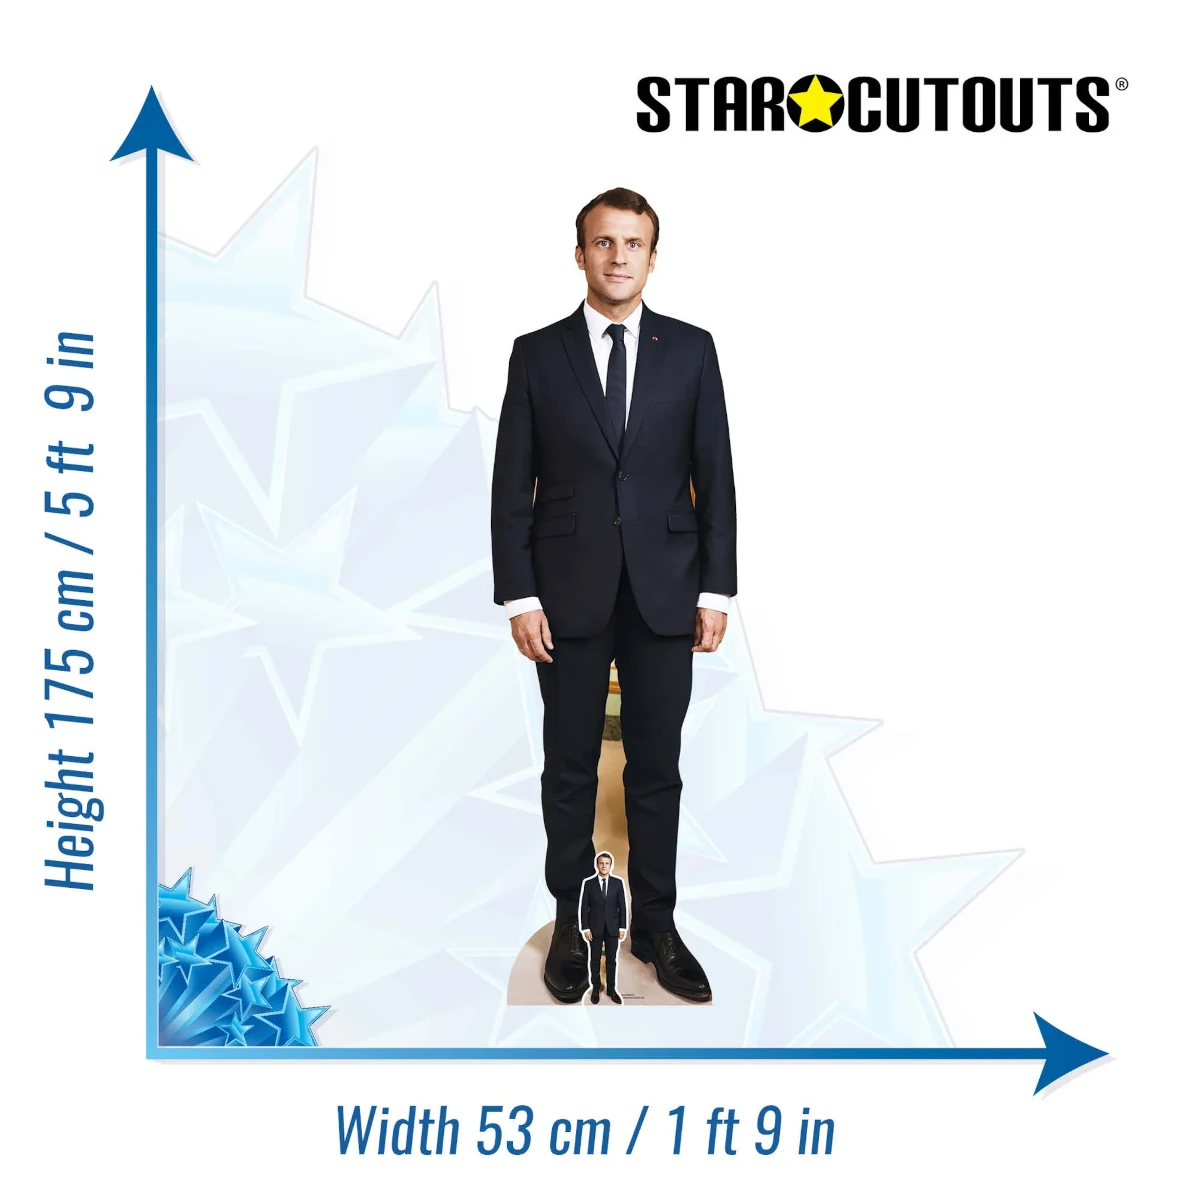 SC4076 Emmanuel Macron (French Politician) Lifesize + Mini Cardboard Cutout Standee Size